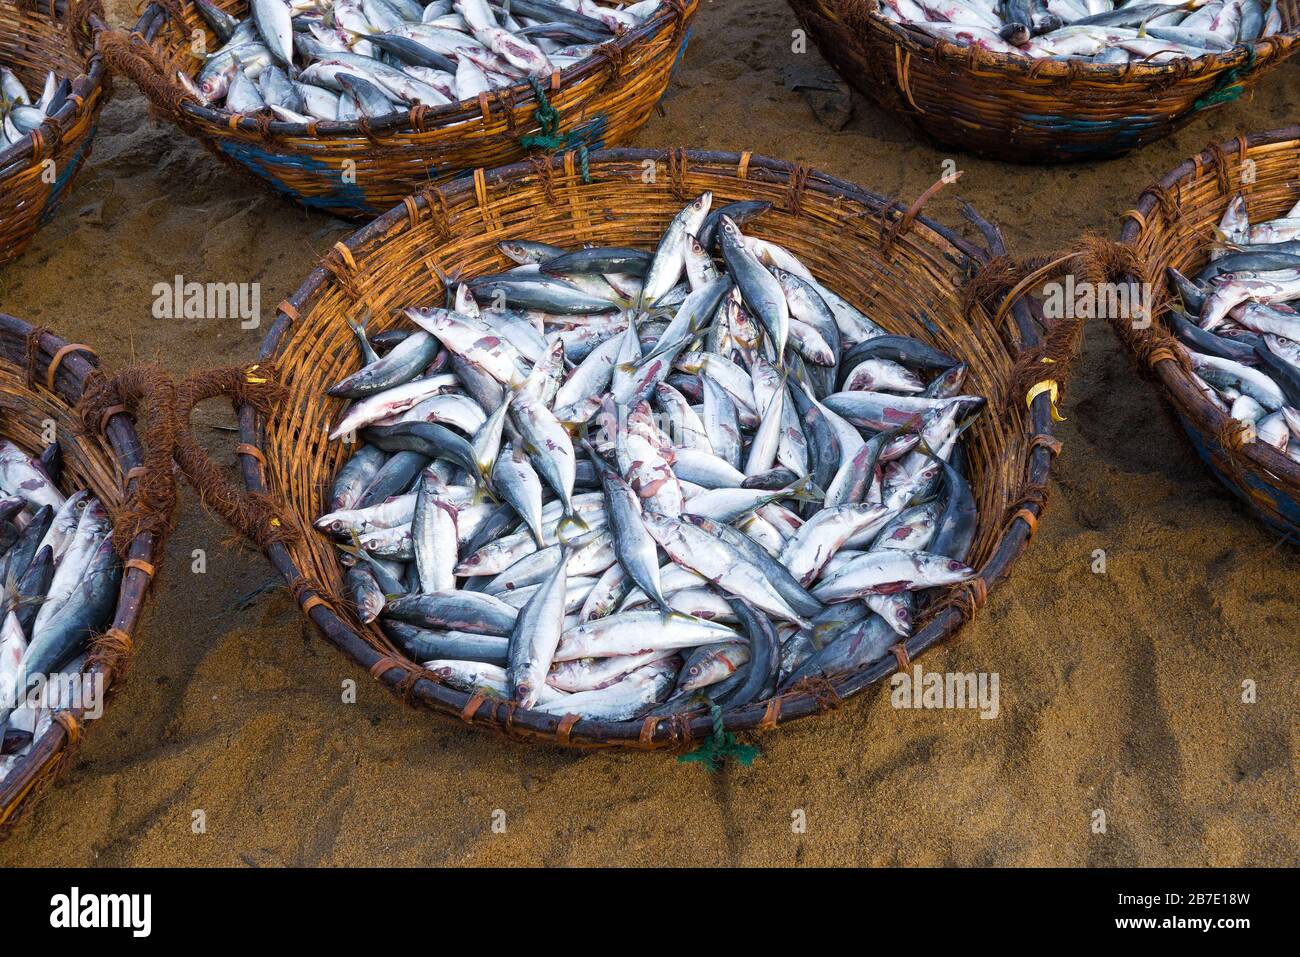 A basket with freshly caught fish close-up on the sand. Negombo, Sri Lanka Stock Photo